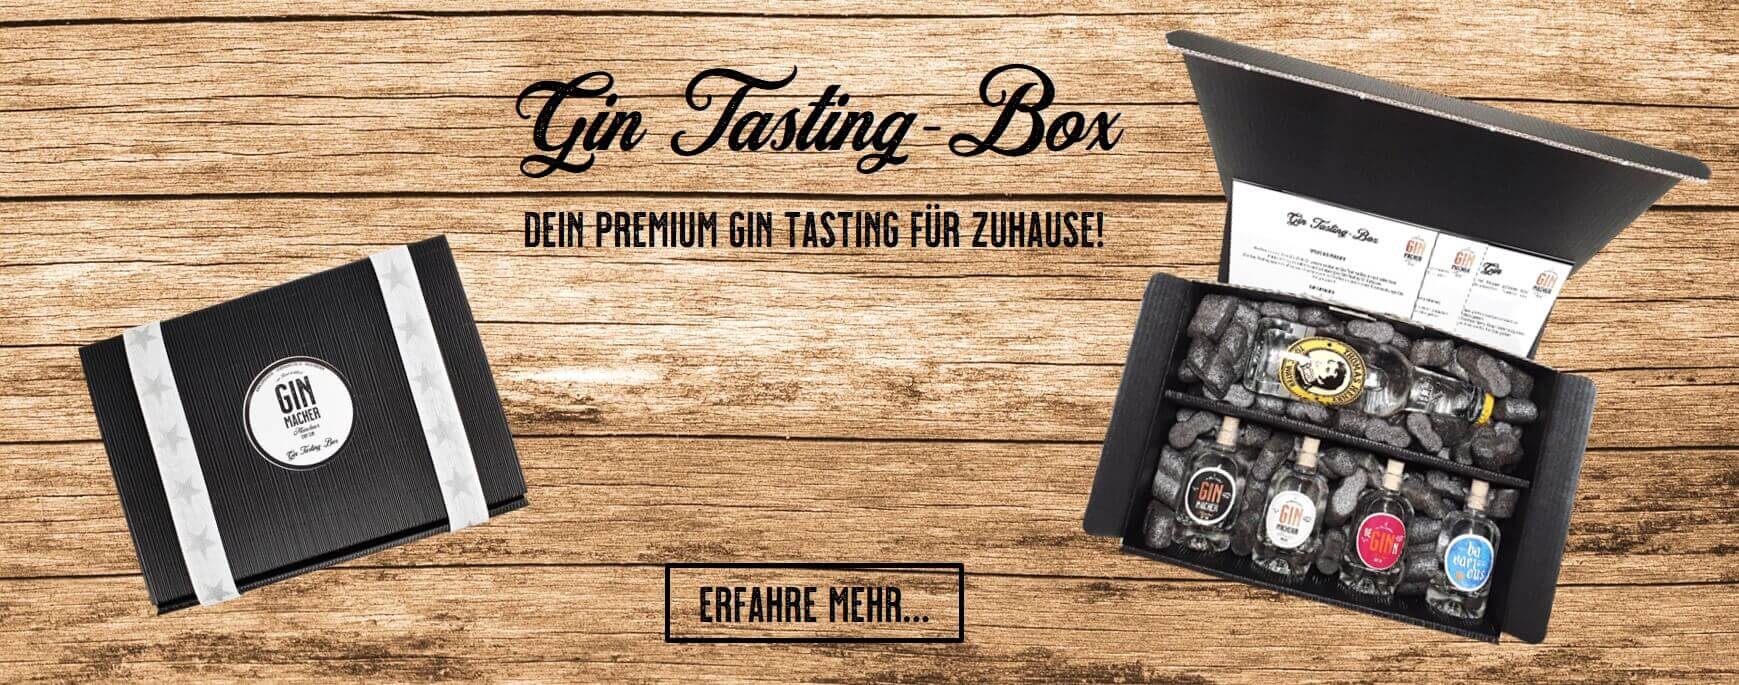 Ginmacher München - Gin Tasting-Box